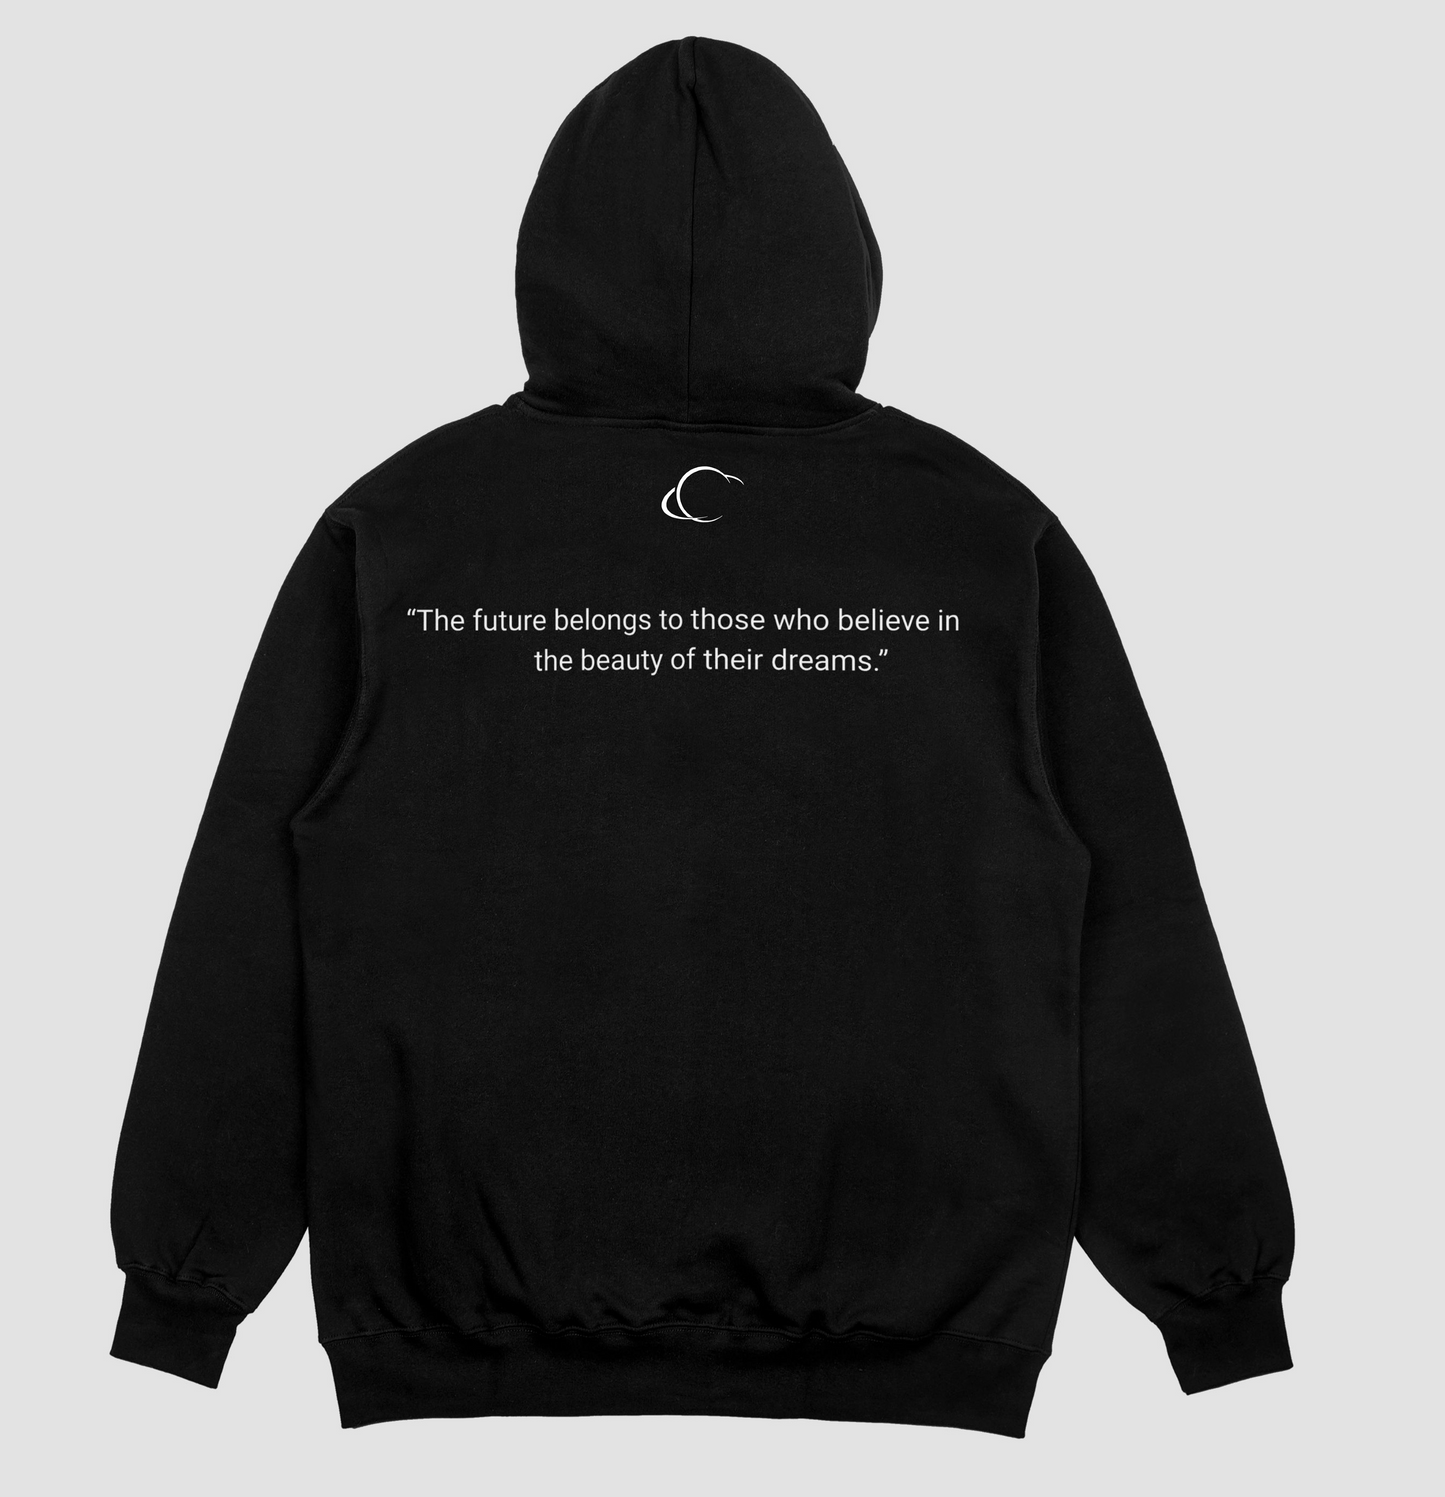 The Dream black hoodie (unisex)